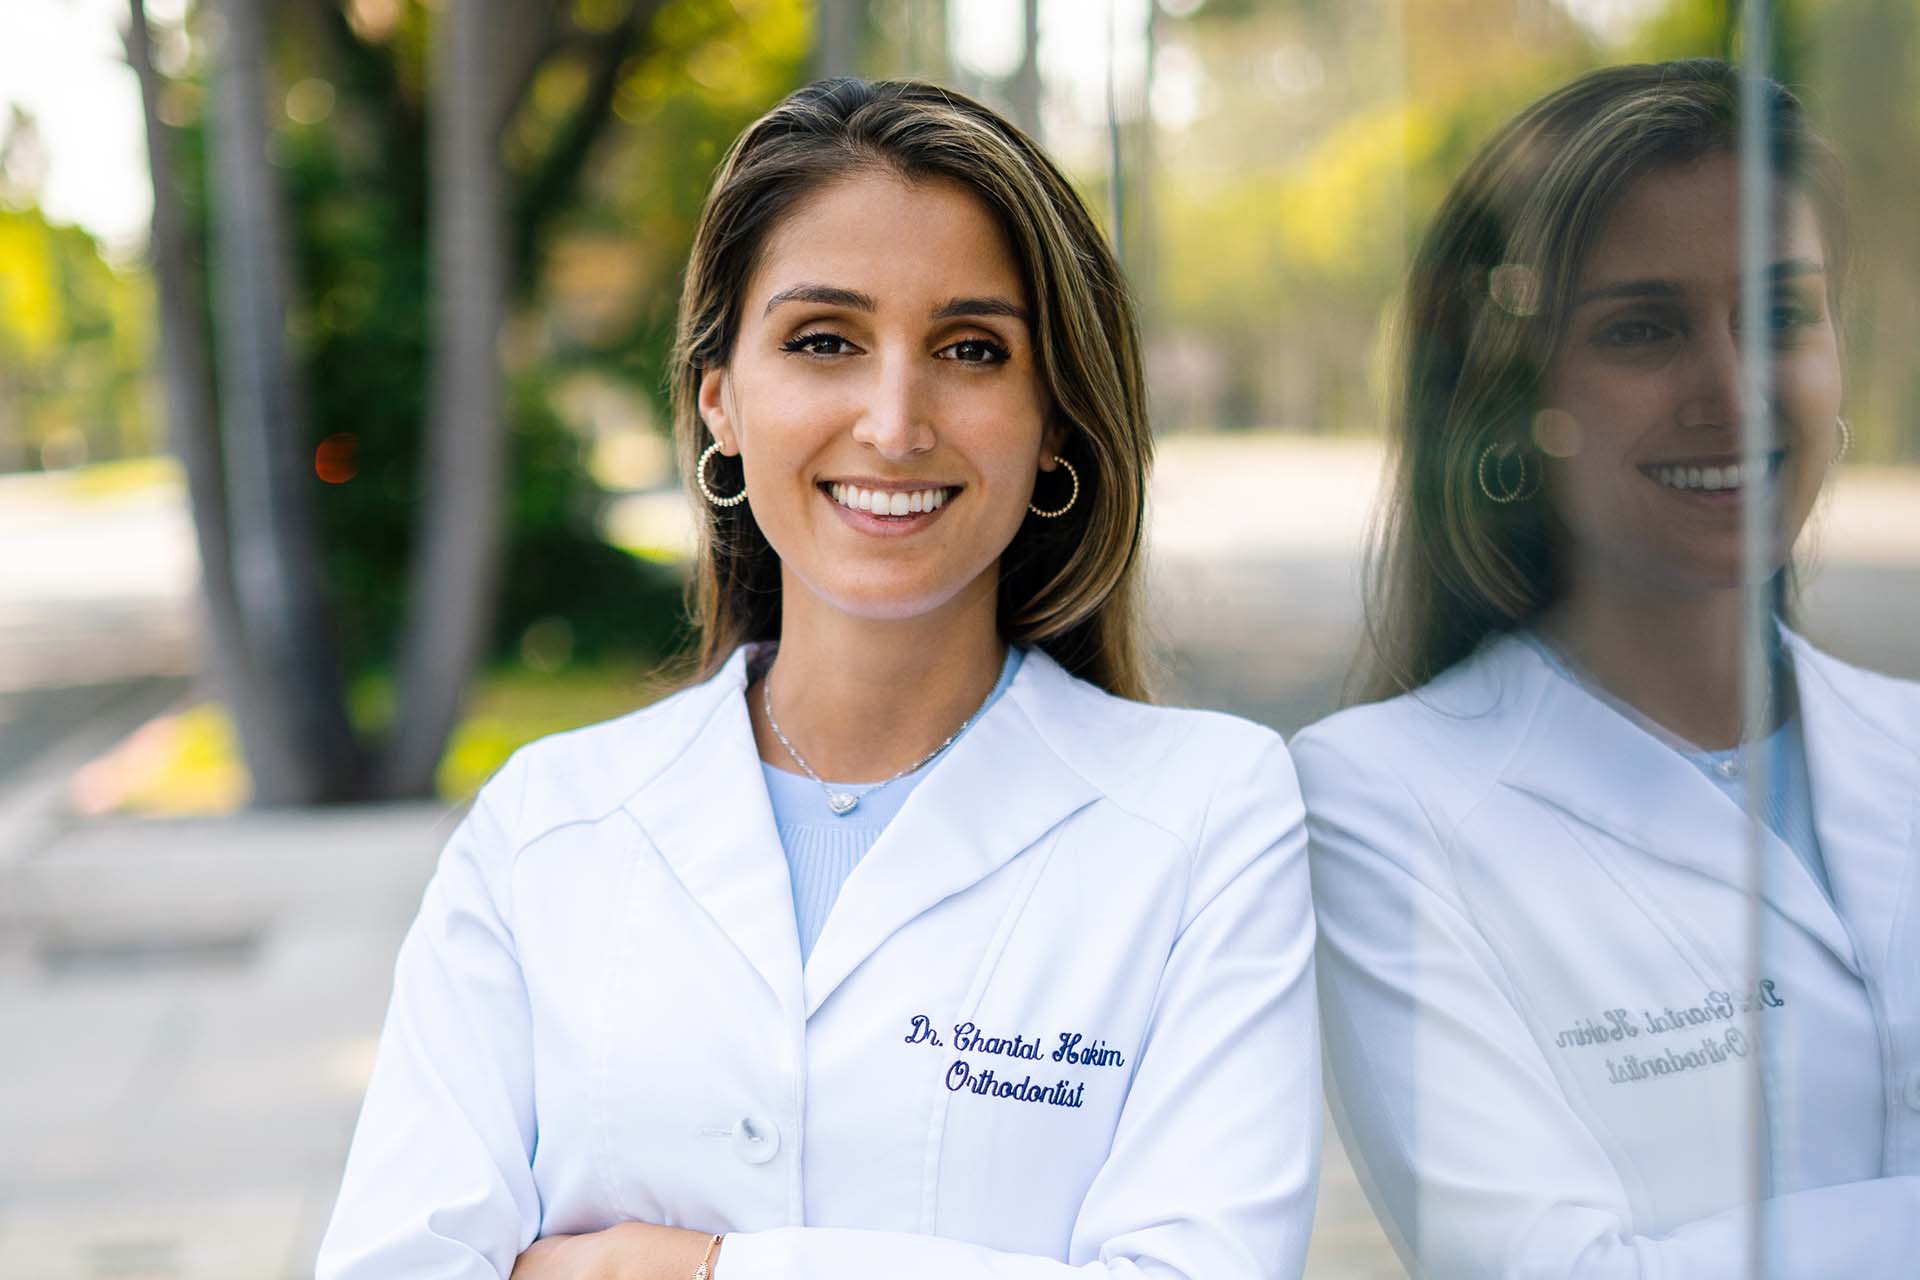 Dr Chantal Hakim of the Orthospaceship - Hakim Orthodontics serving Brentwood, Los Angeles